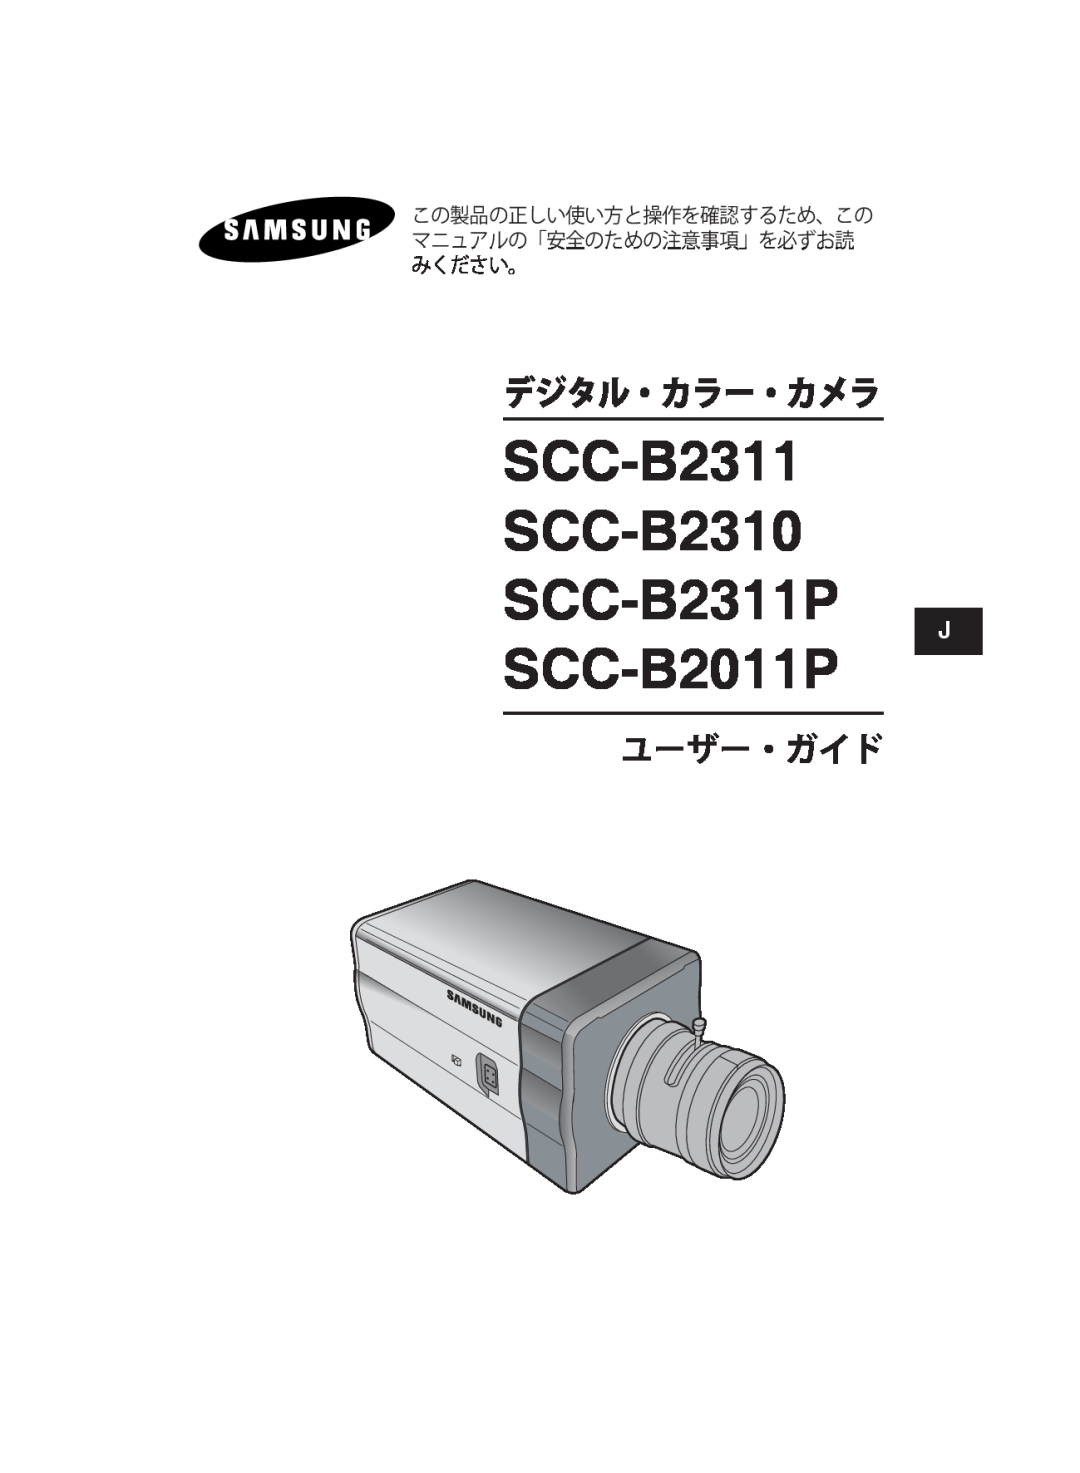 Samsung SCC-B2311N, SCC-B2311P/TRK, SCC-B2011P/TRK SCC-B2311 SCC-B2310 SCC-B2311P SCC-B2011P, デジタル・カラー・カメラ, ユーザー・ガイド 